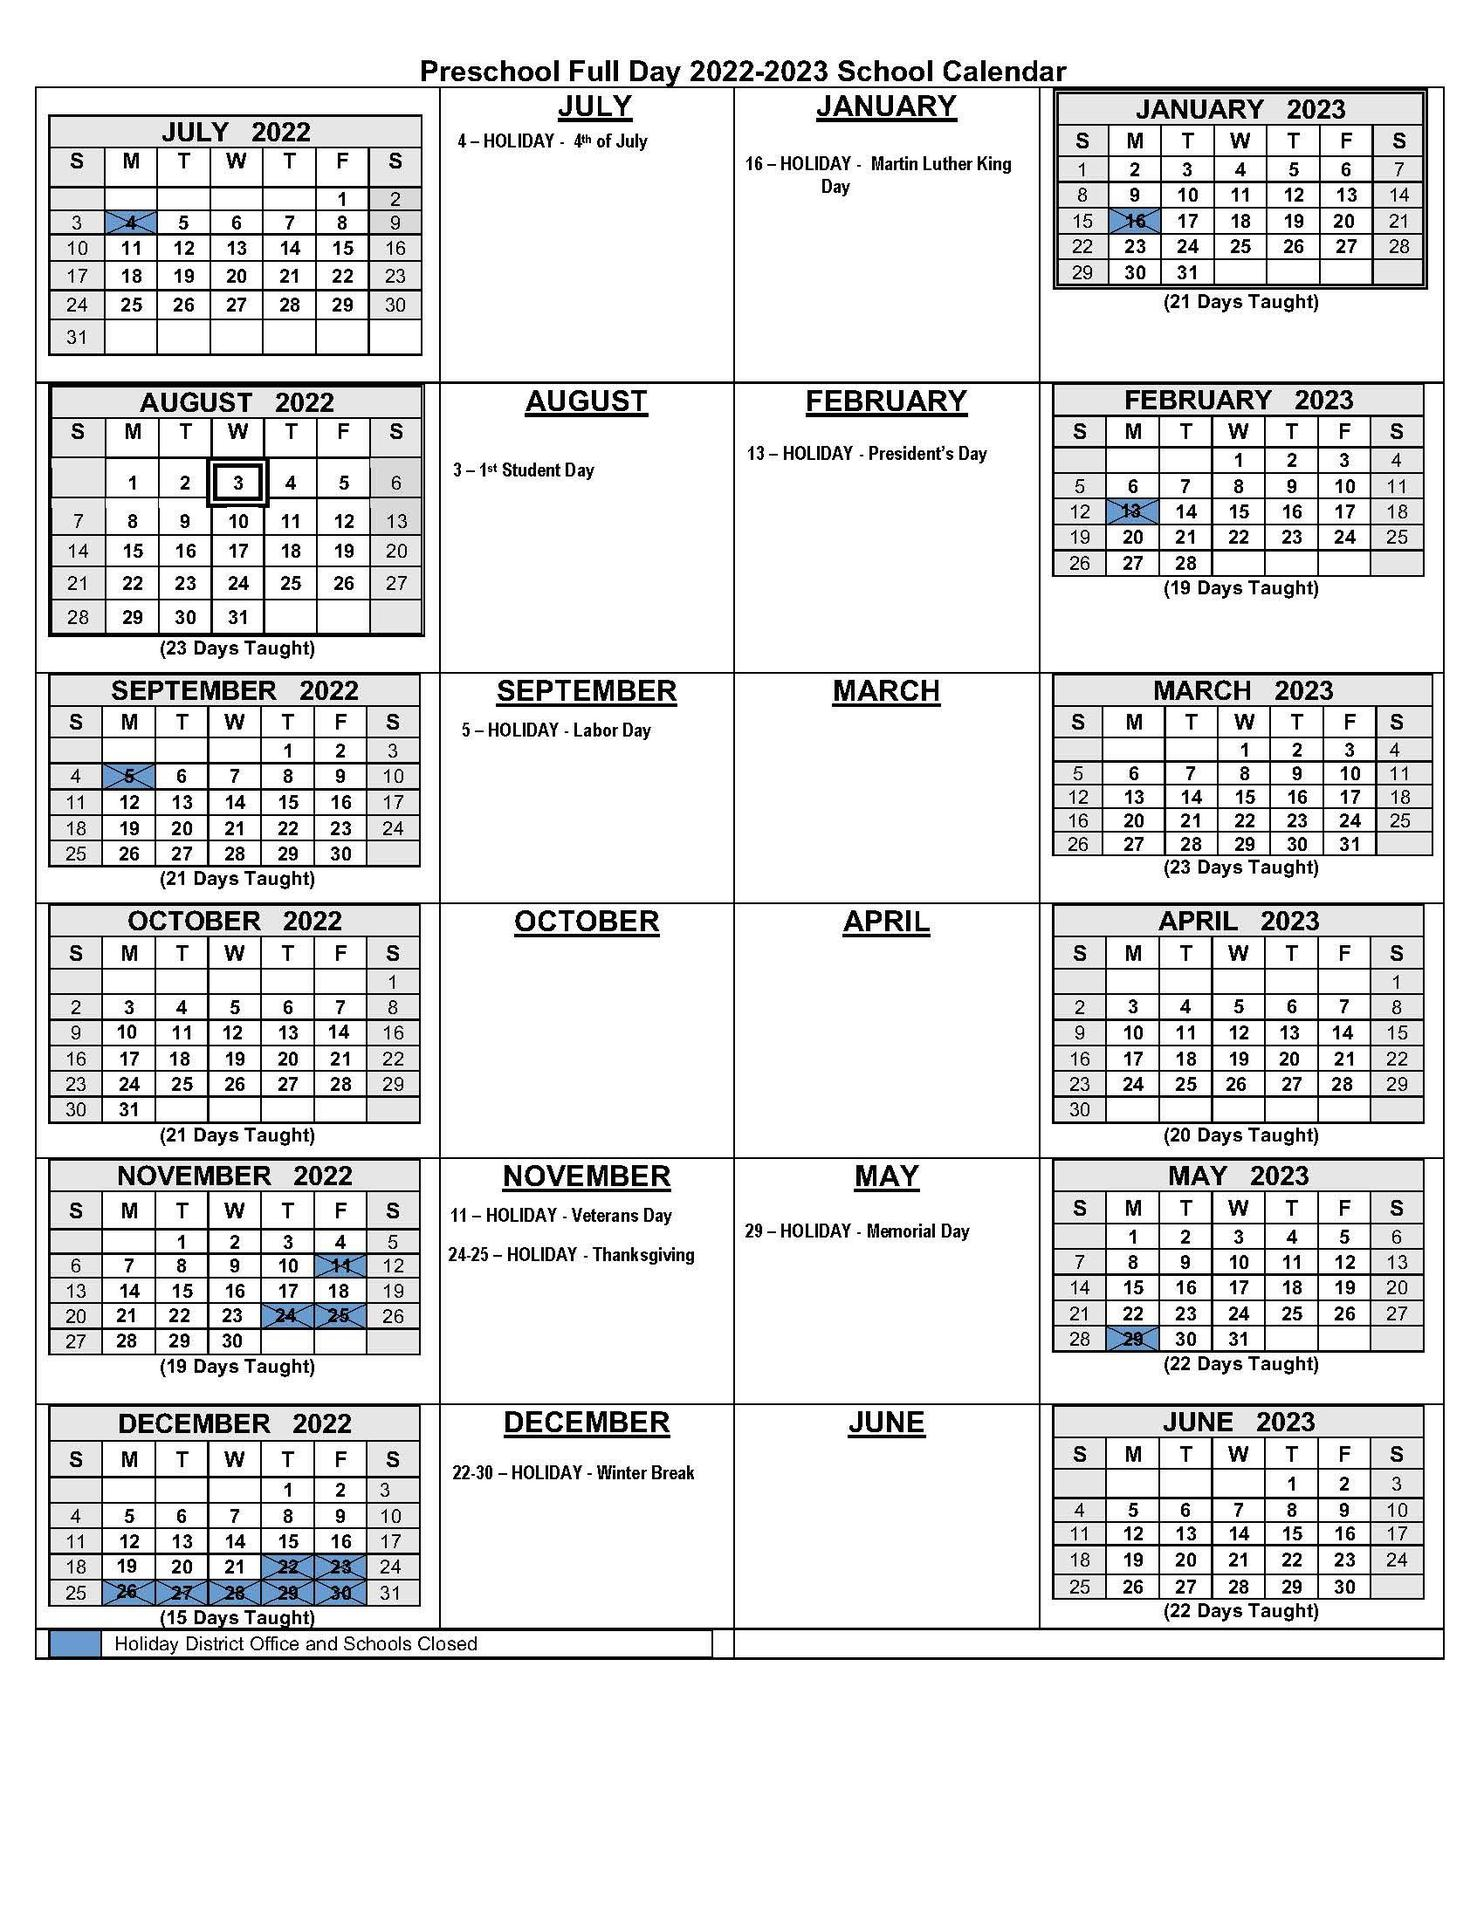 concordia-st-paul-academic-calendar-2022-2023-calendar2023